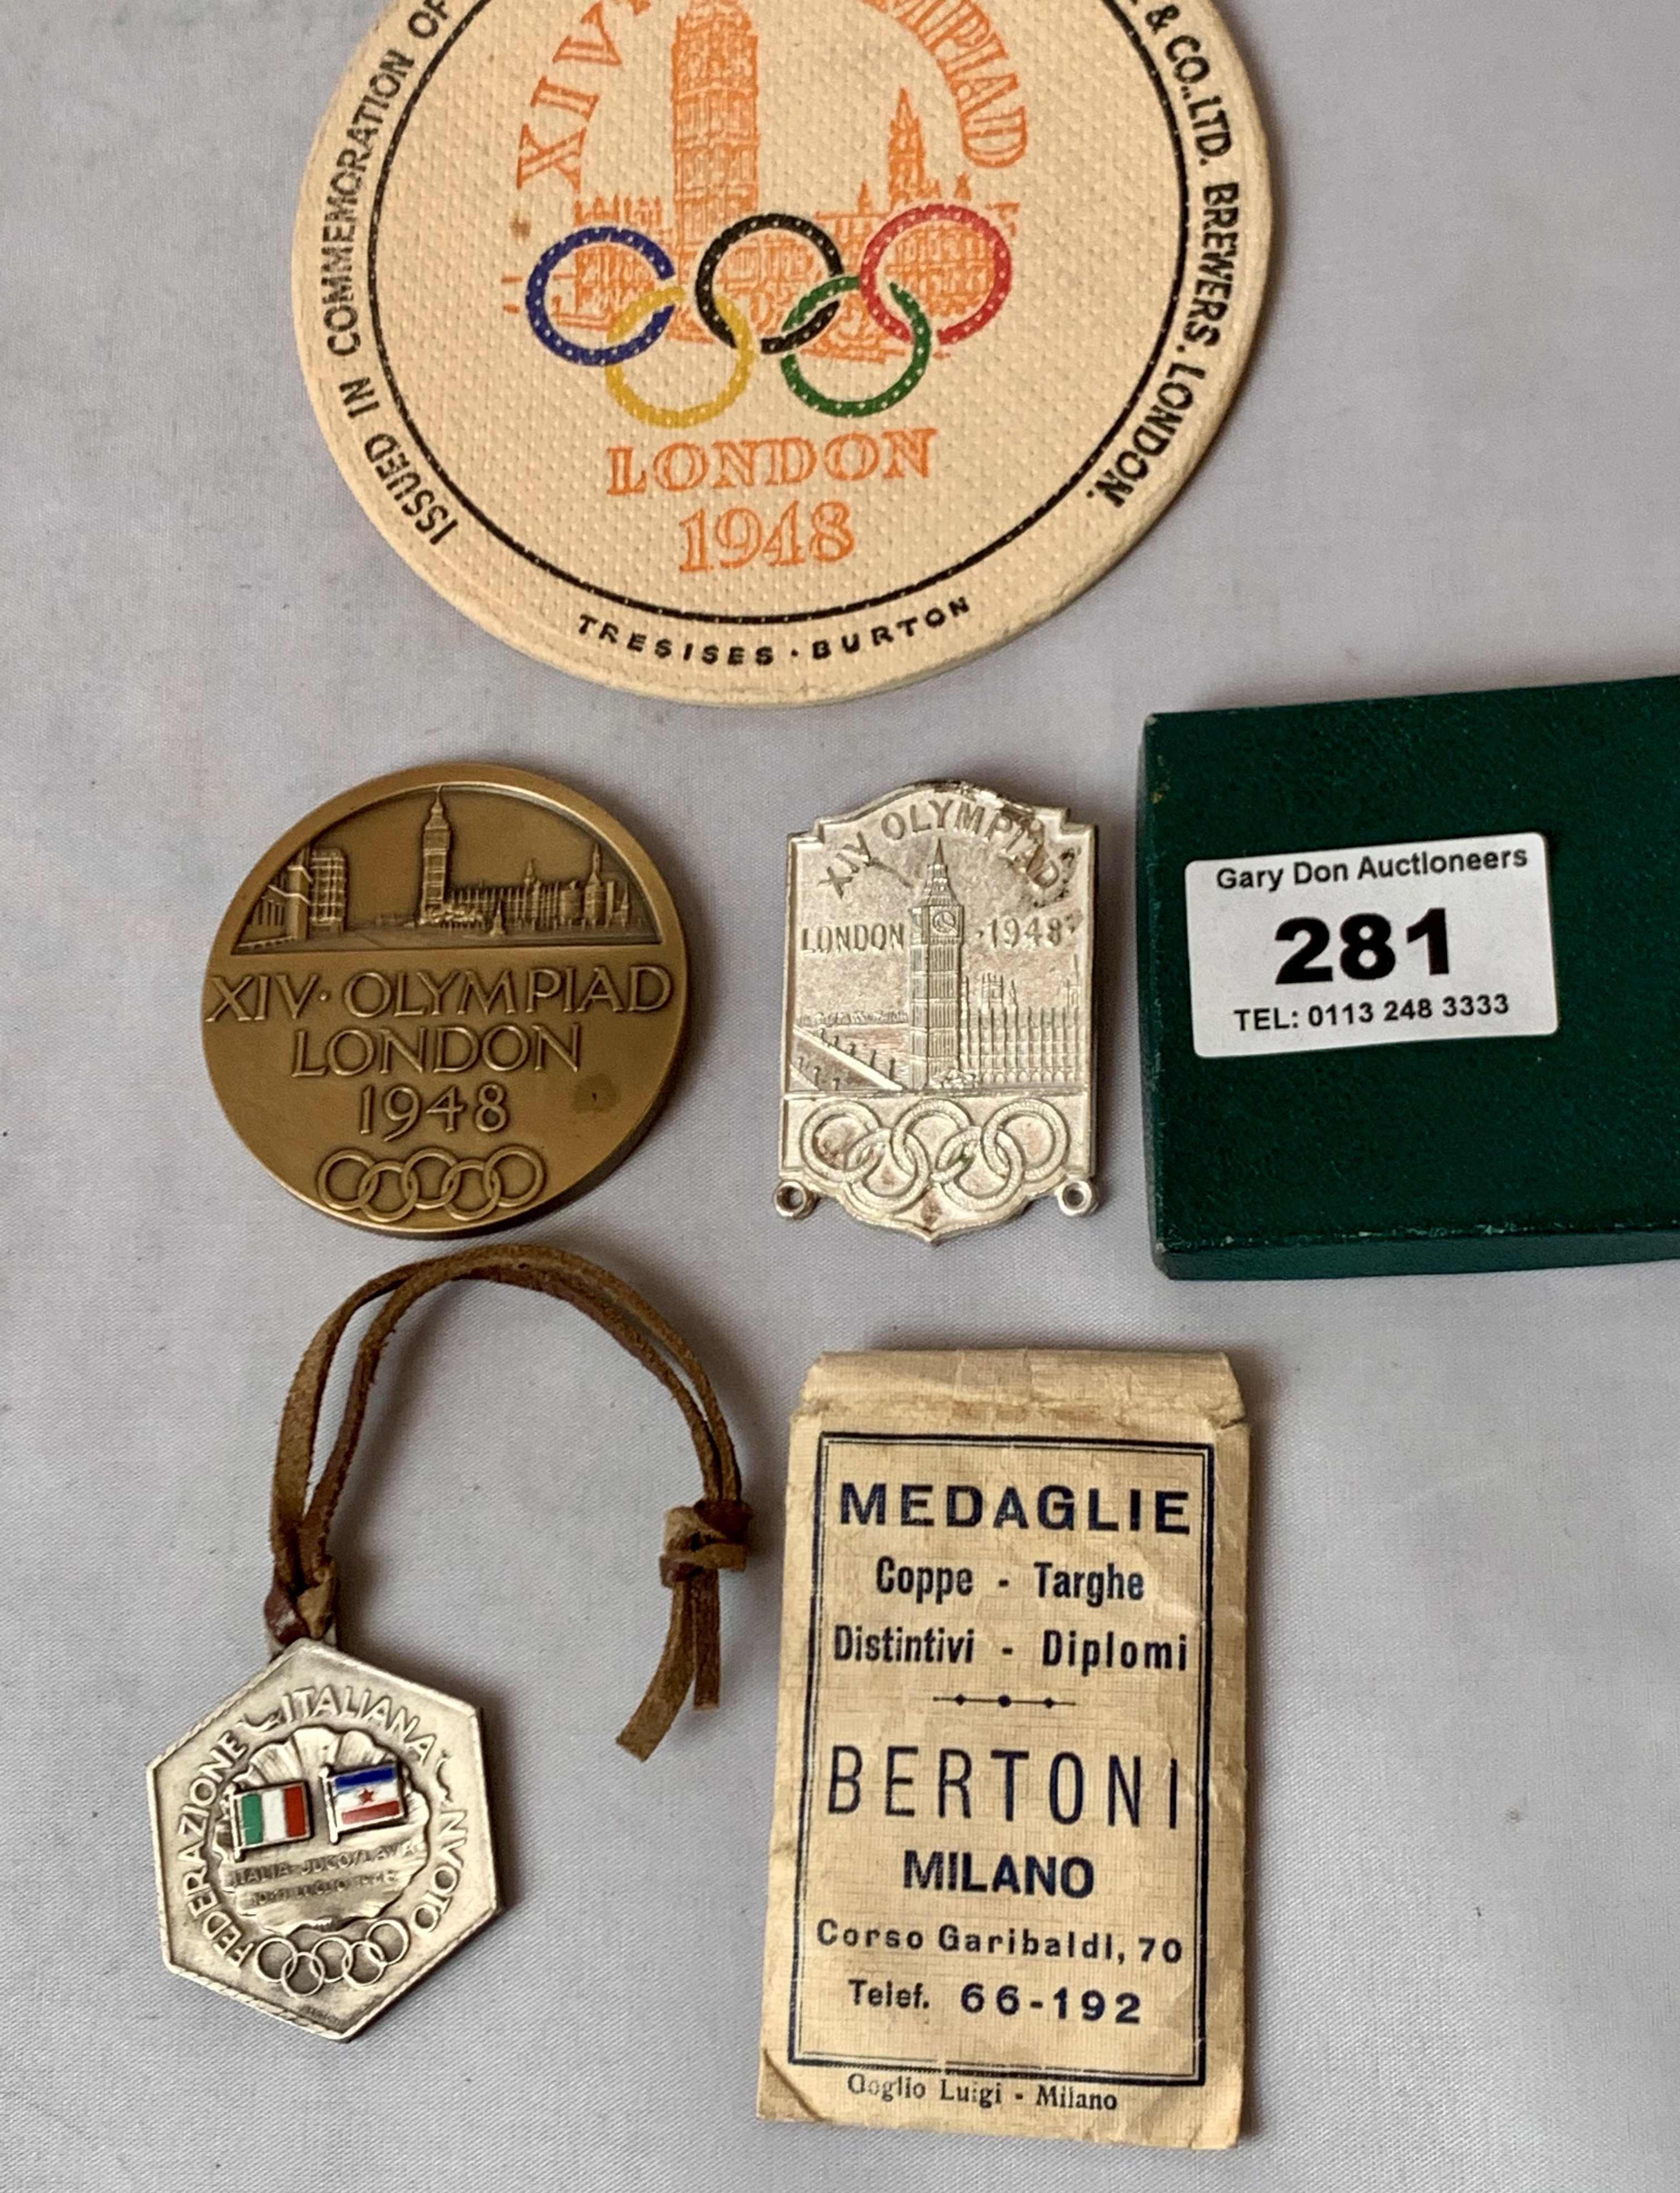 Olympics London 1948 memorabilia including Aquatics Directions for Officials and Competitors,Taylor, - Image 2 of 4